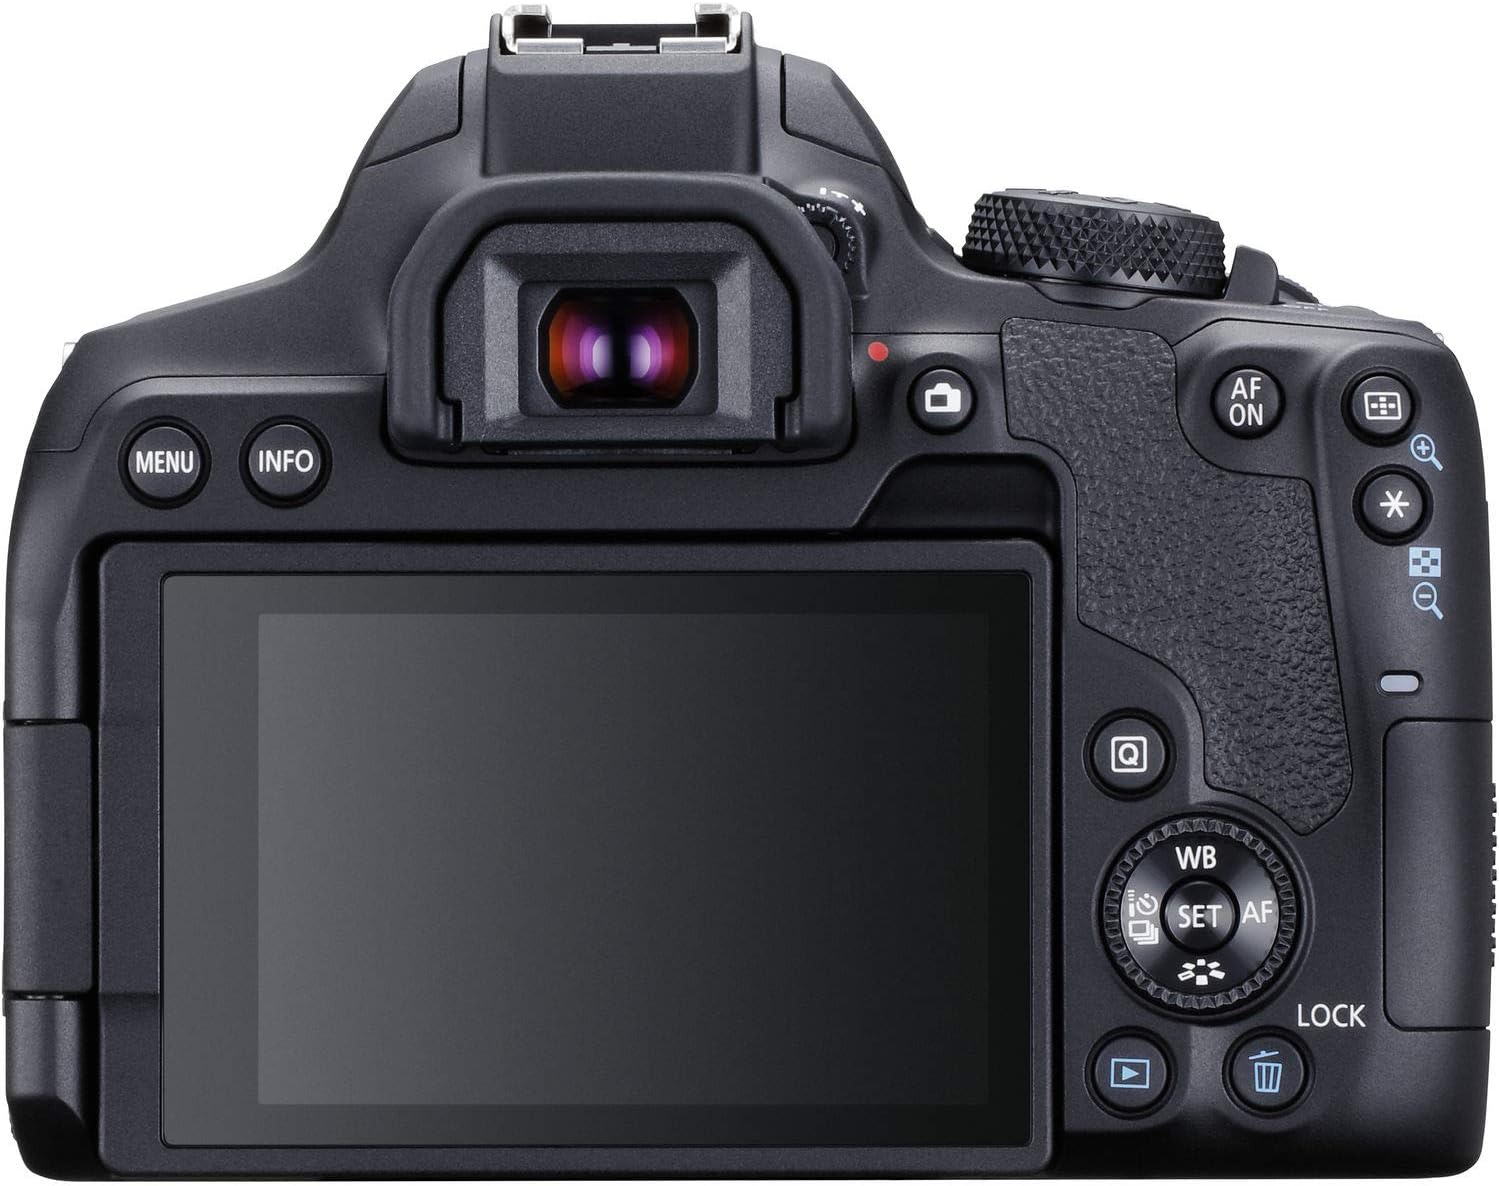 Canon EOS Rebel 850D / T8i DSLR Camera + 64GB Memory Card + Case Pro Bundle